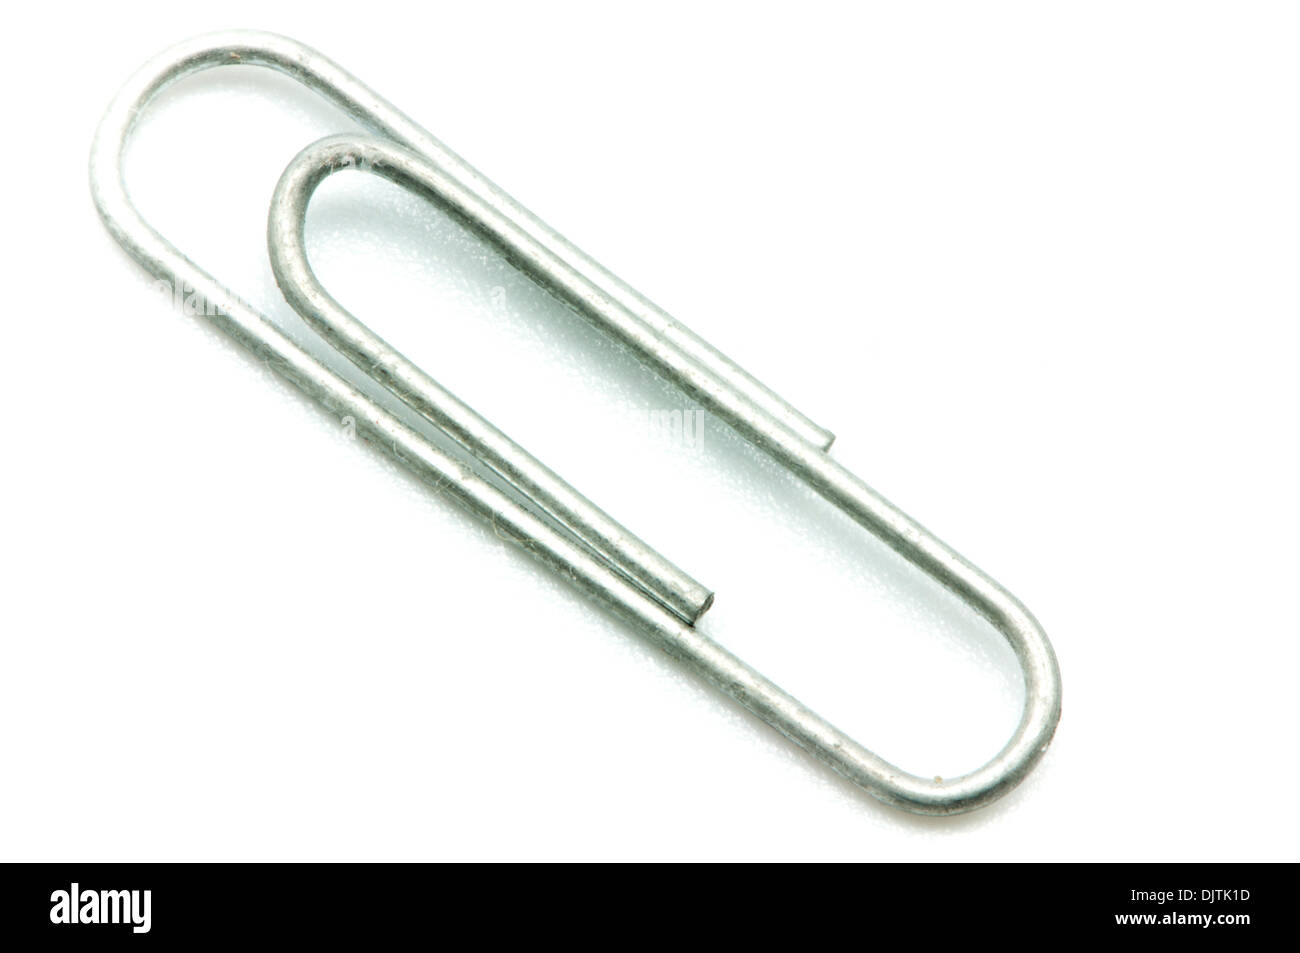 Iron clip on a white background Stock Photo